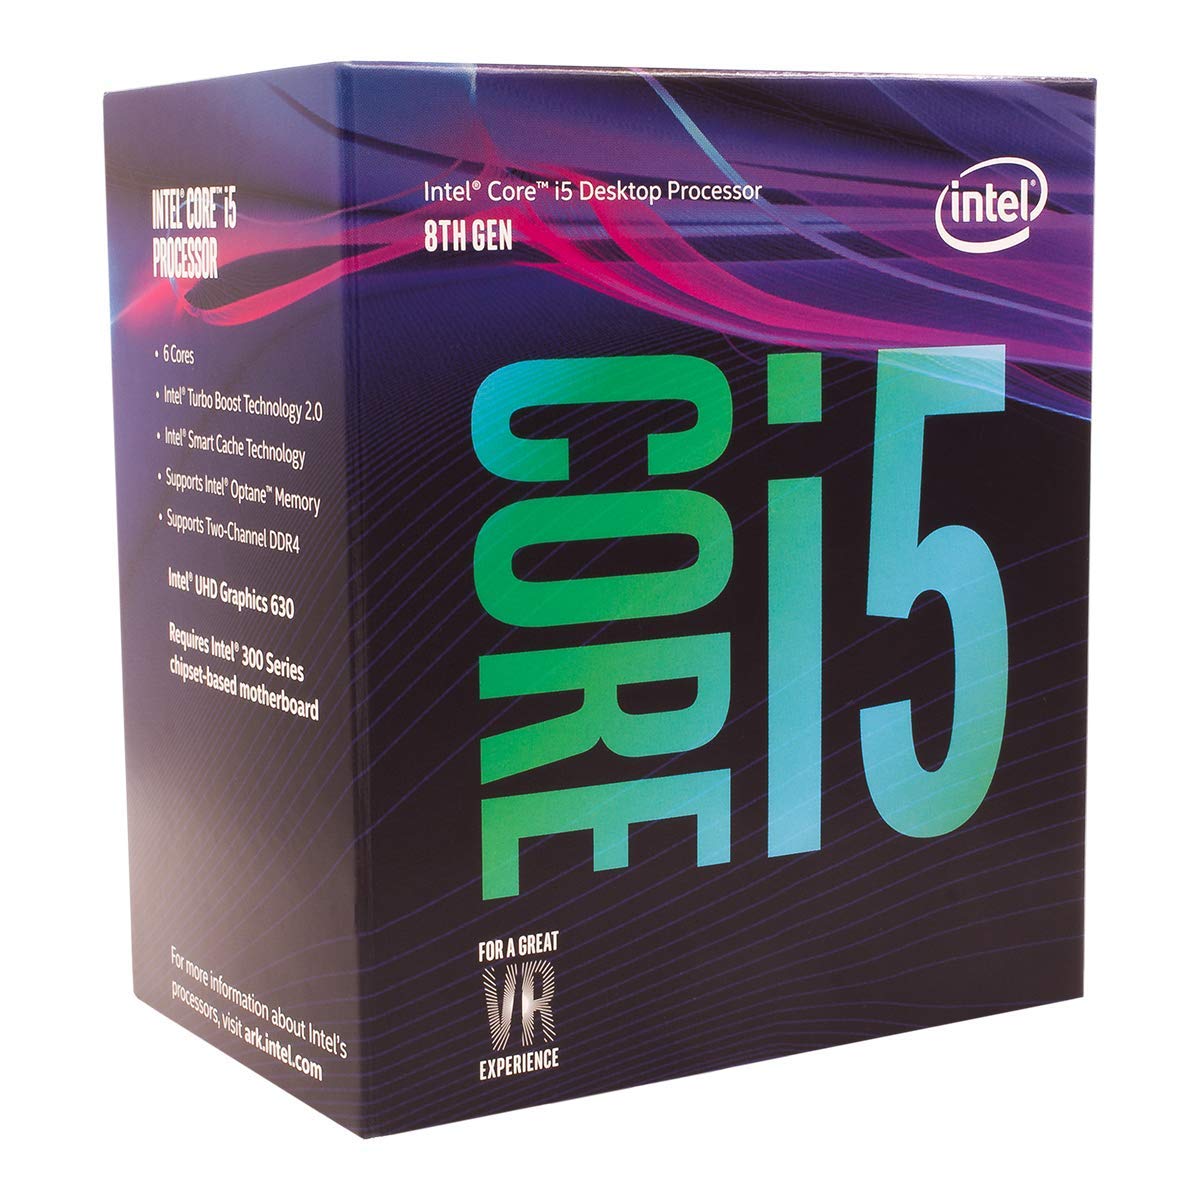 CPU INTEL CORE™ i5 8400 TH GEN 2.8 GHz 9MB CACHE SOK LGA 1151 TRAY بدون مروحه, Desktop CPU